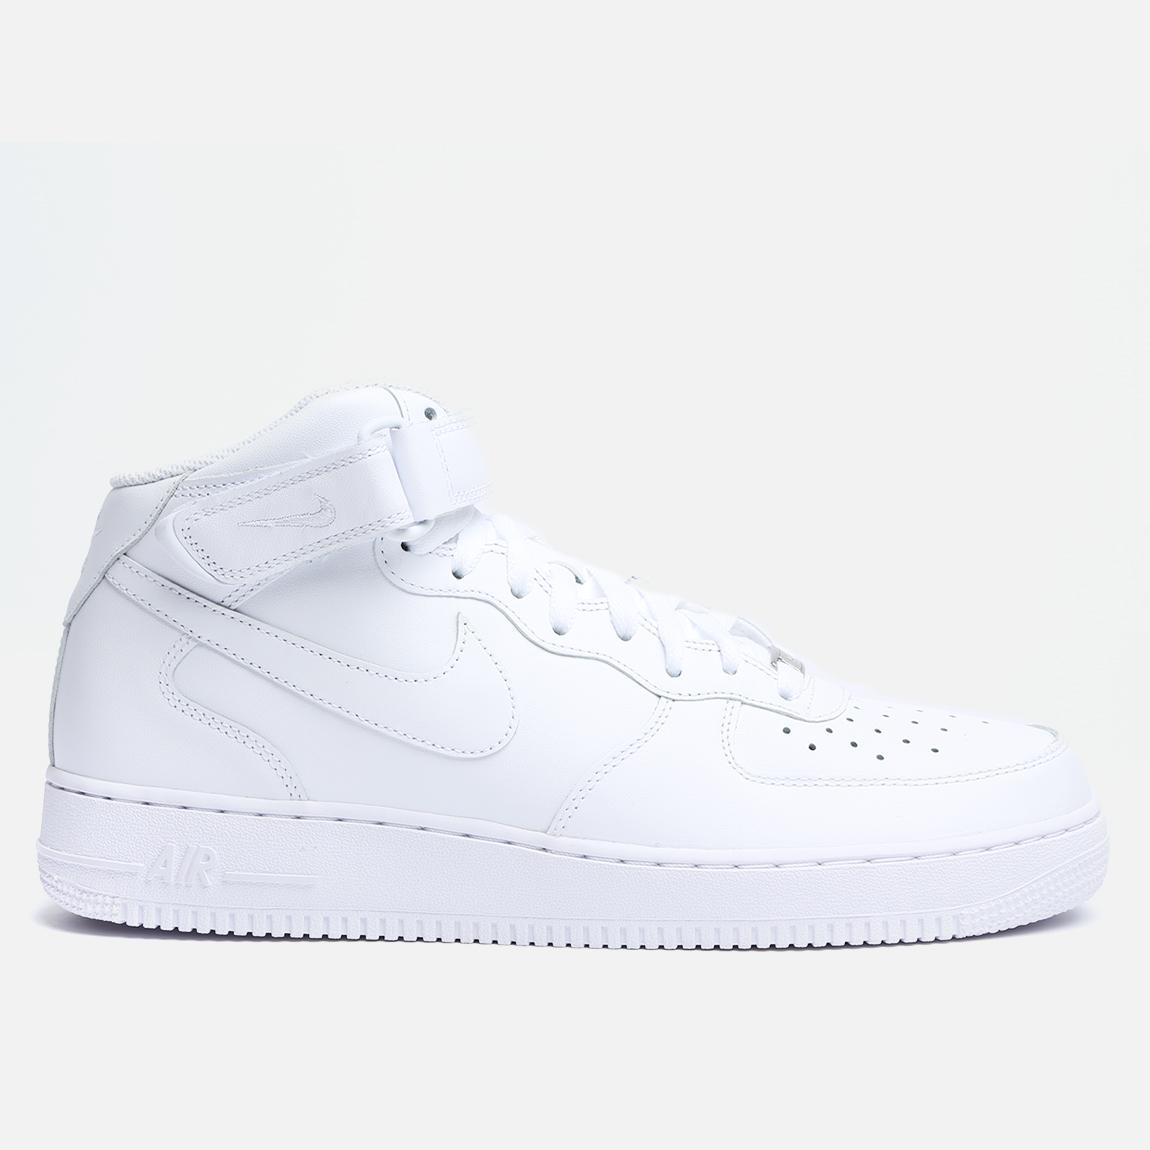 Air Force 1 ’07 Mid - 315123-111 - White Nike Sneakers | Superbalist.com